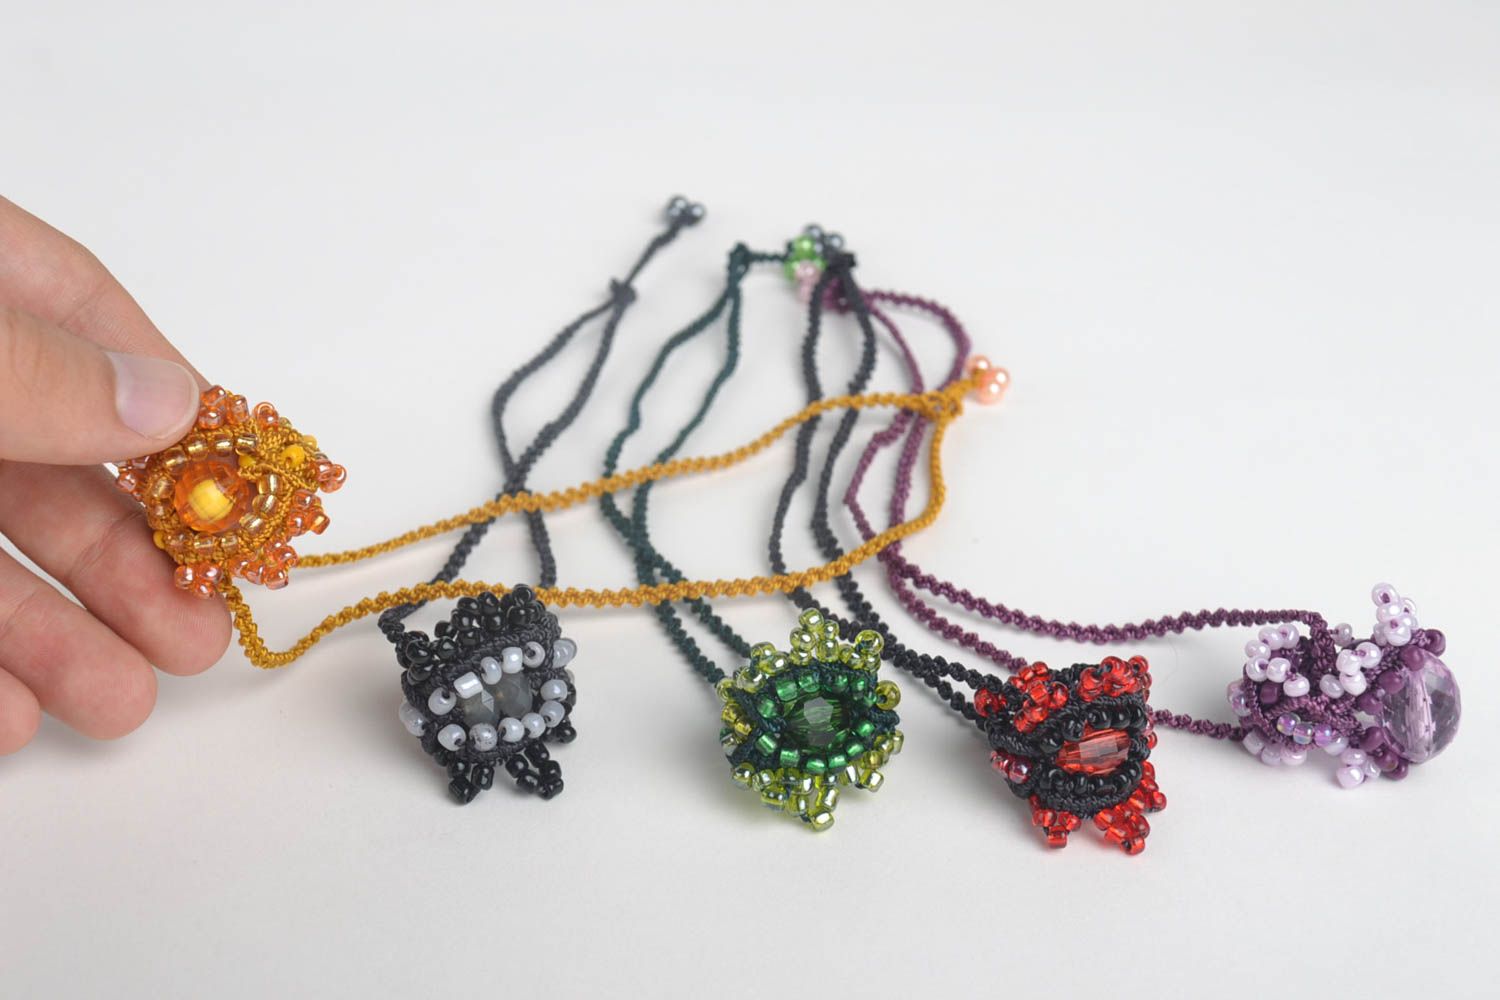 Handmade pendant designer pendant beads pendant macrame pendant set of 5 items photo 5